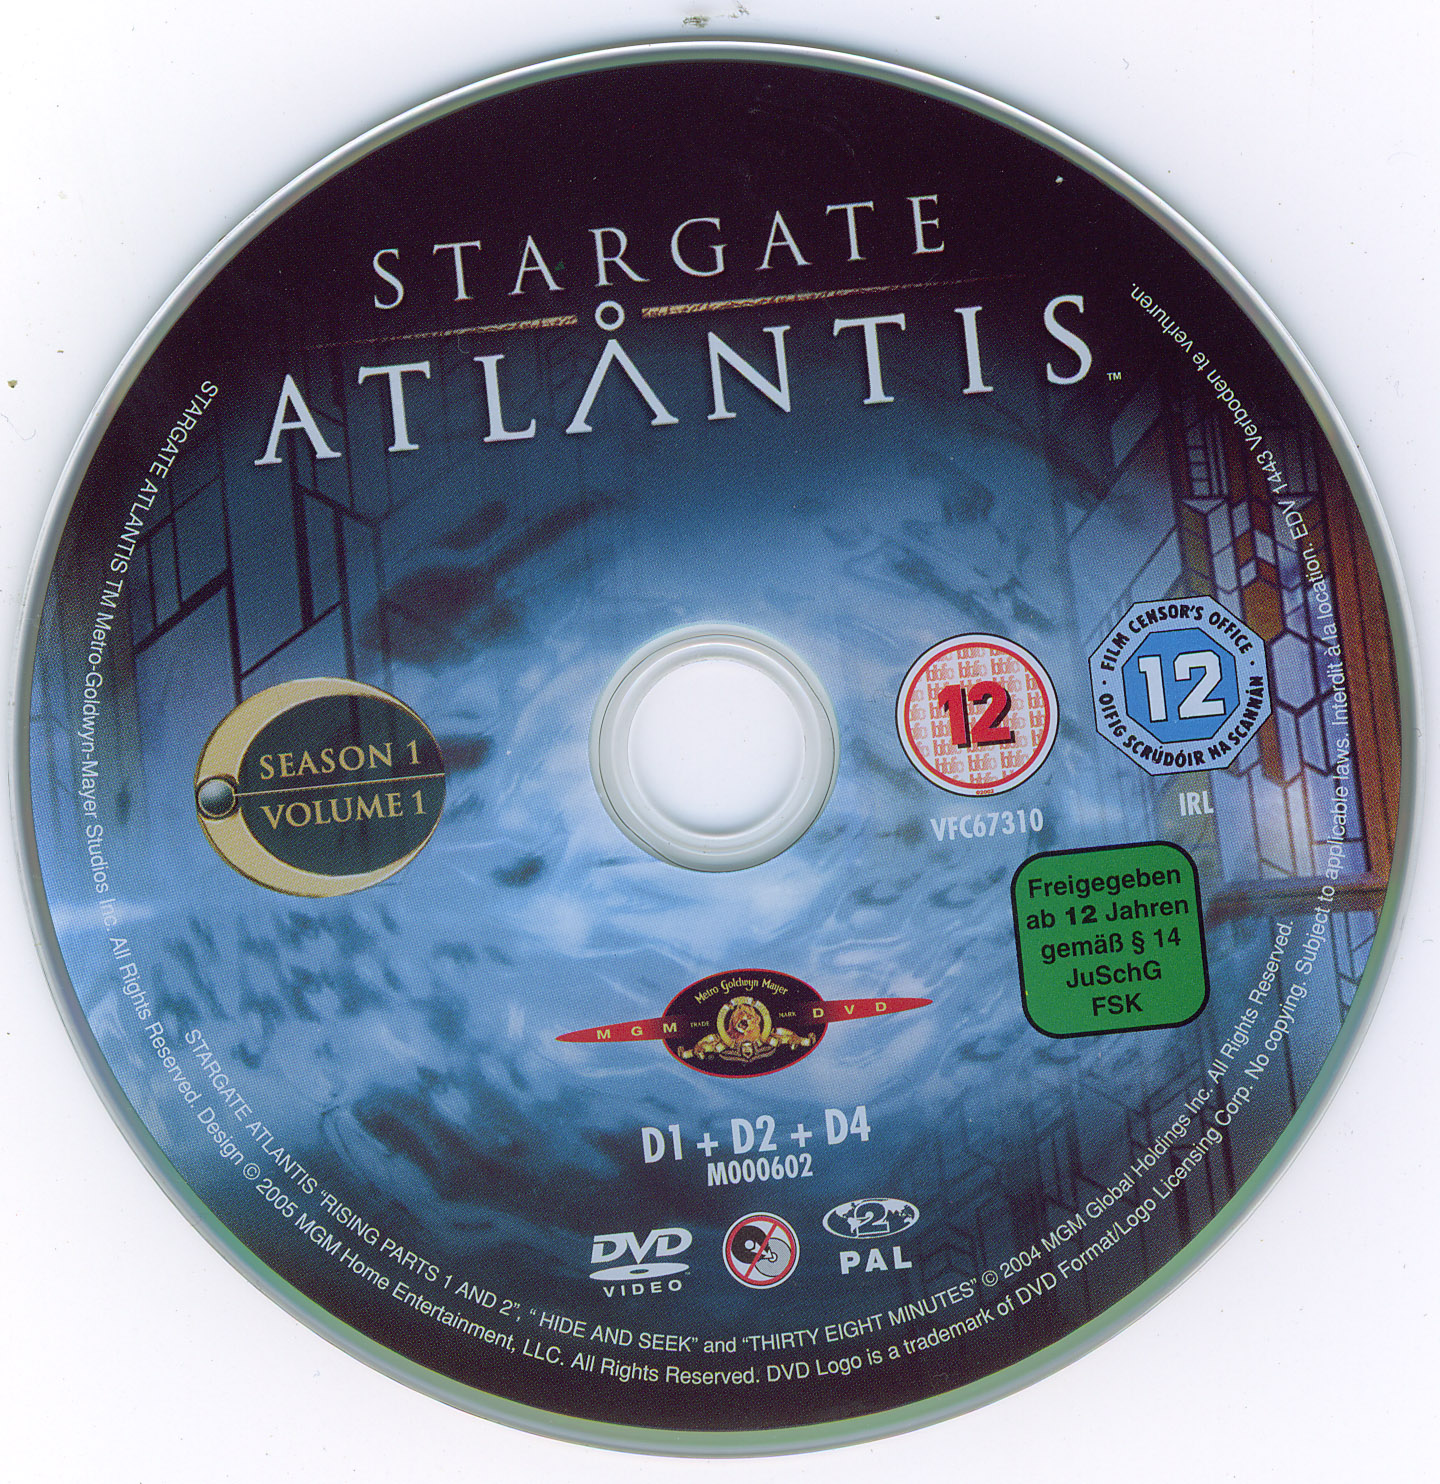 Stargate Atlantis saison 1 vol 1